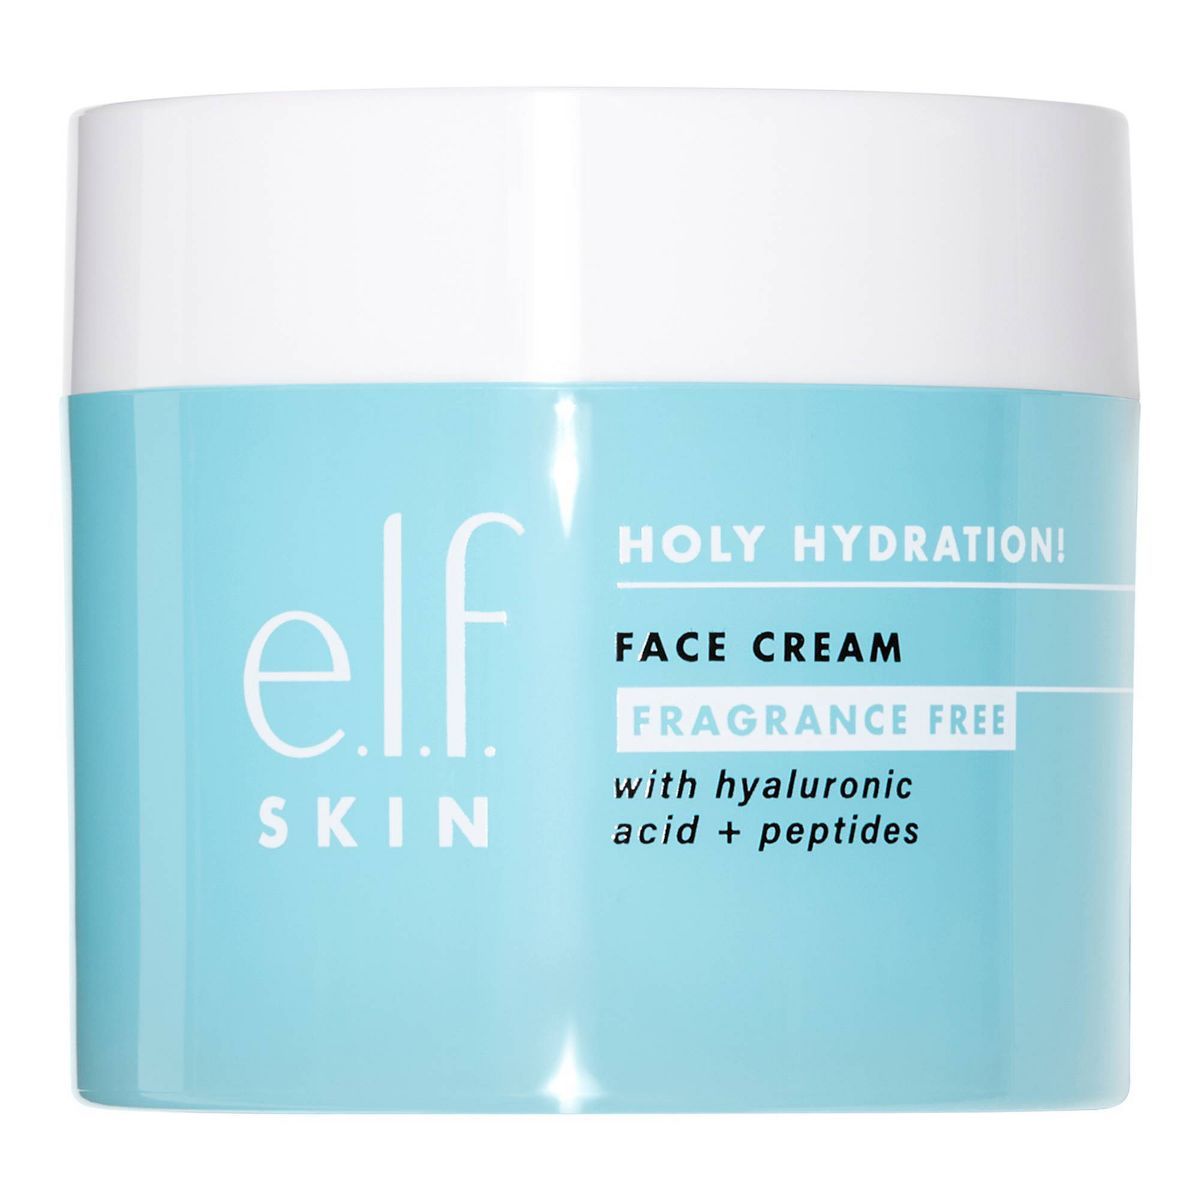 e.l.f. Holy Hydration Face Cream Fragrance Free - 1.8oz | Target